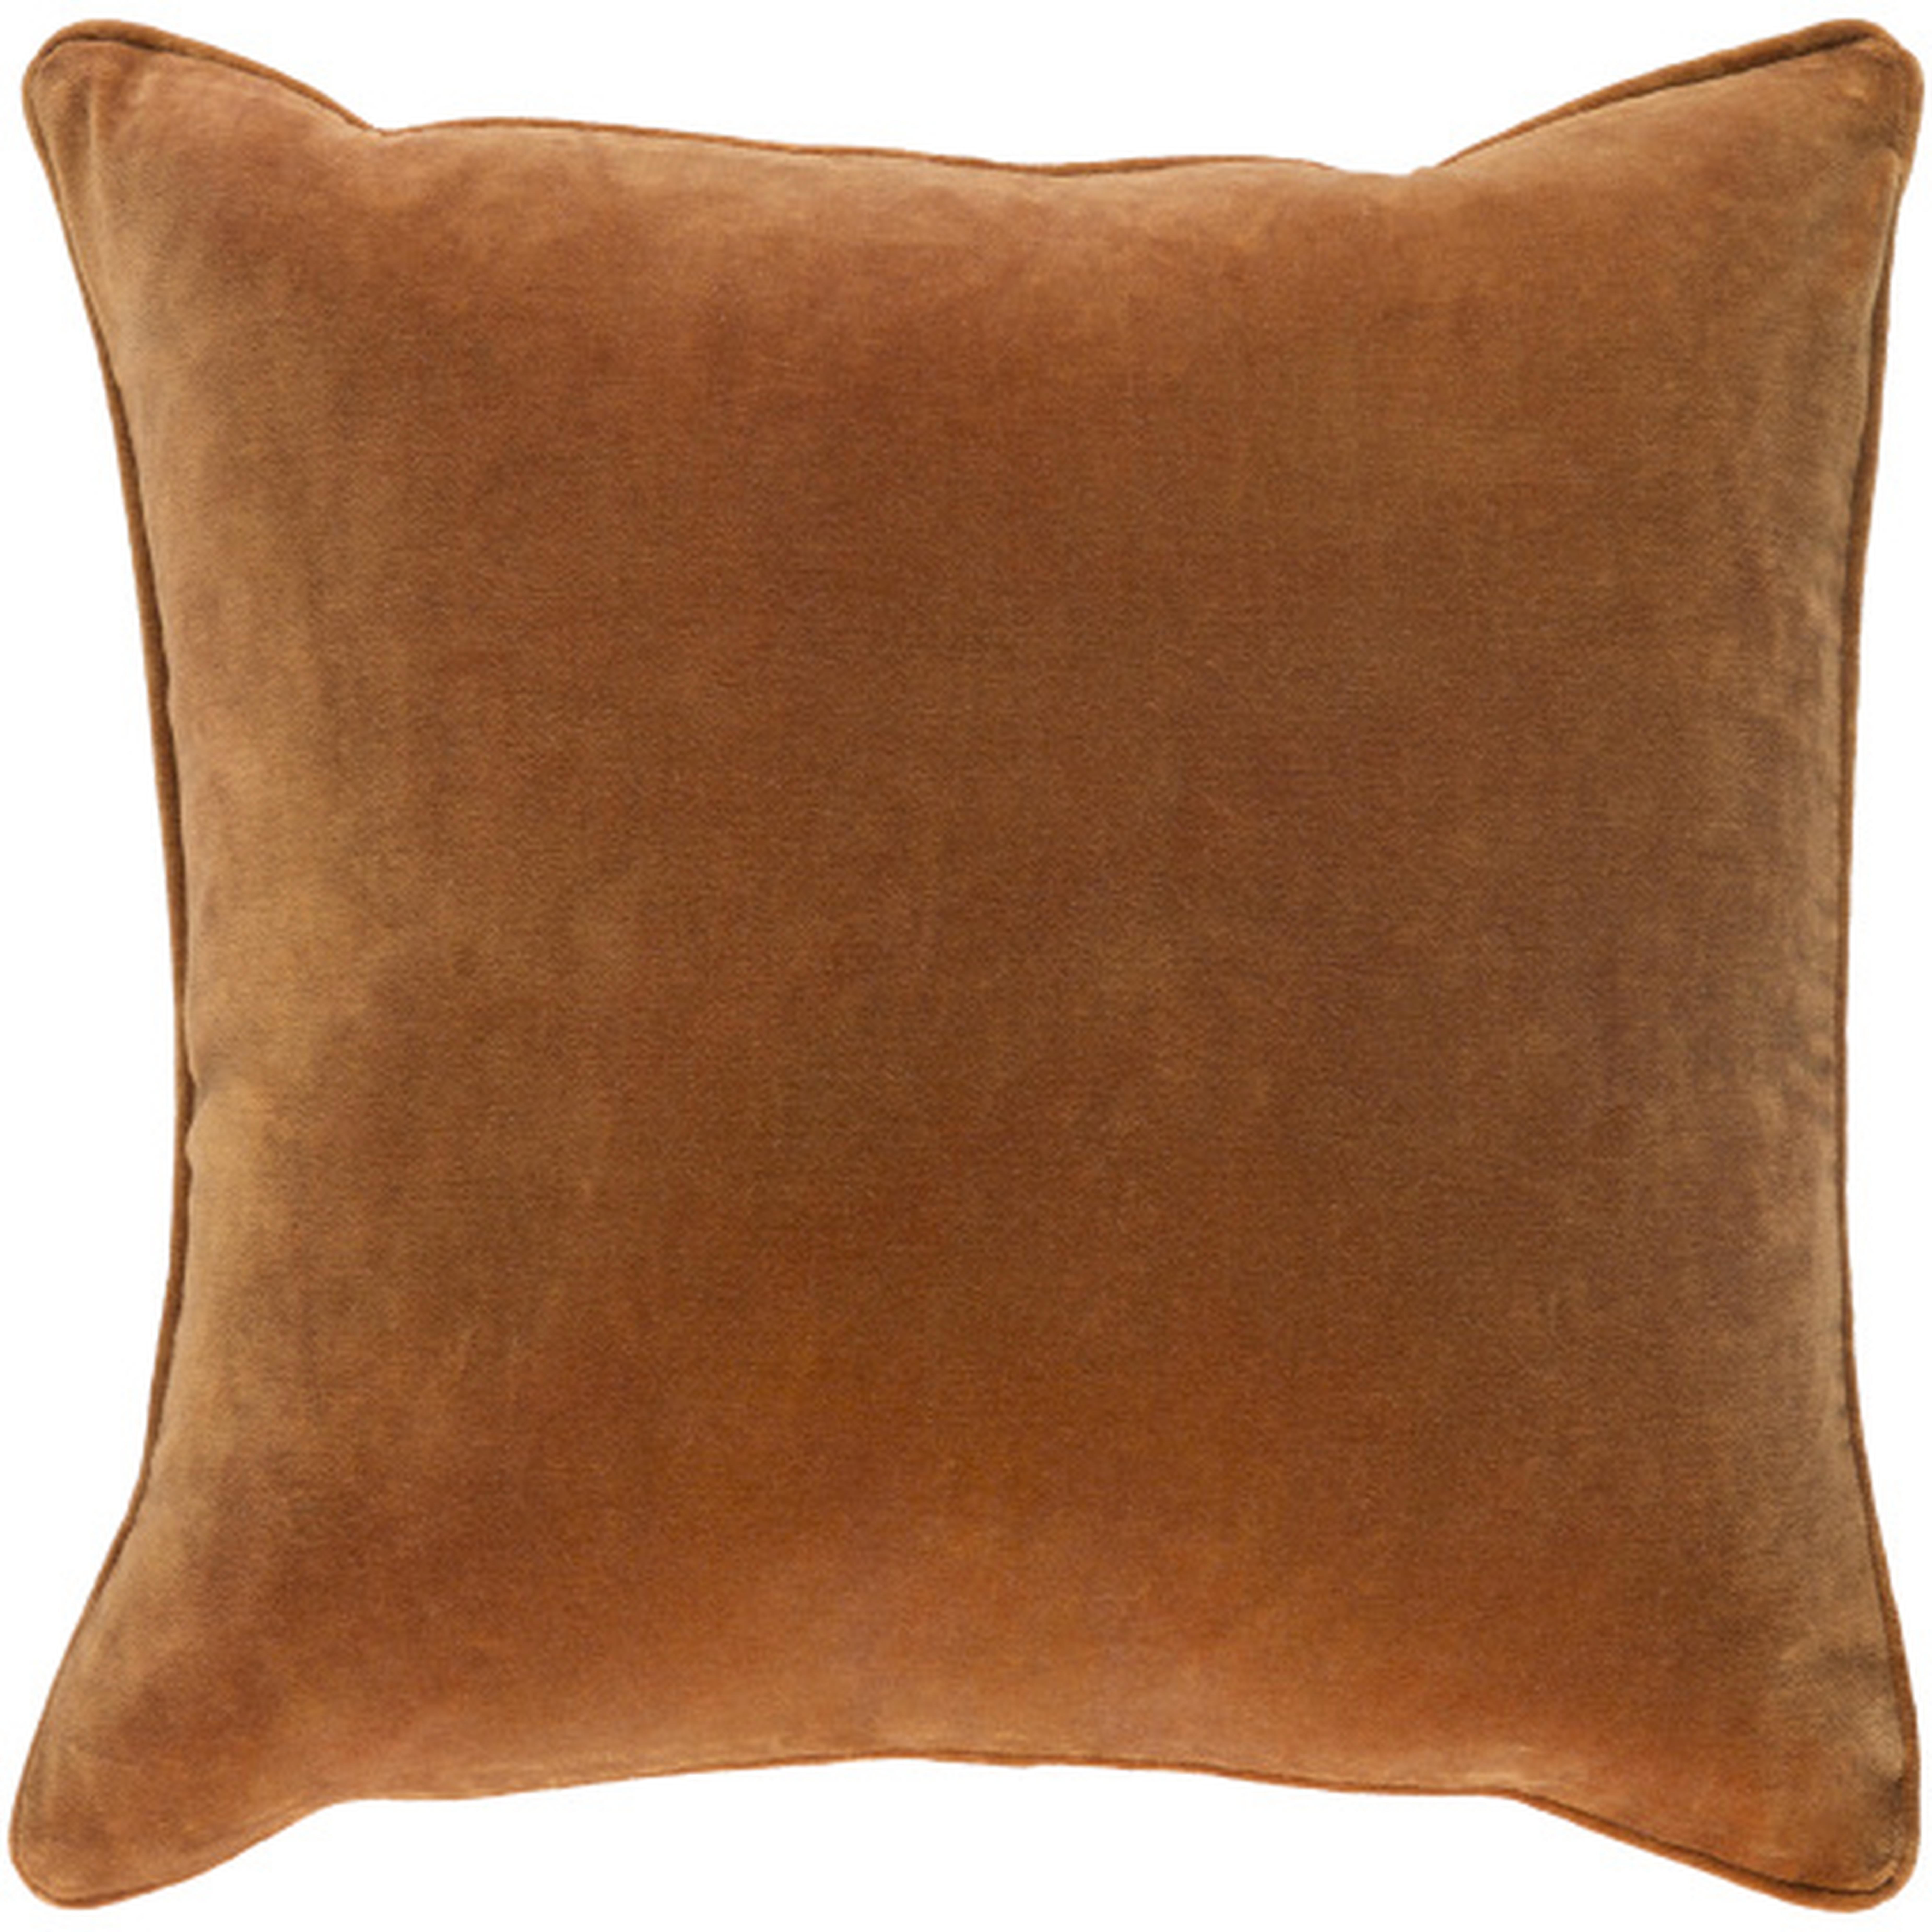 Safflower Throw Pillow, 20" x 20", with down insert - Surya